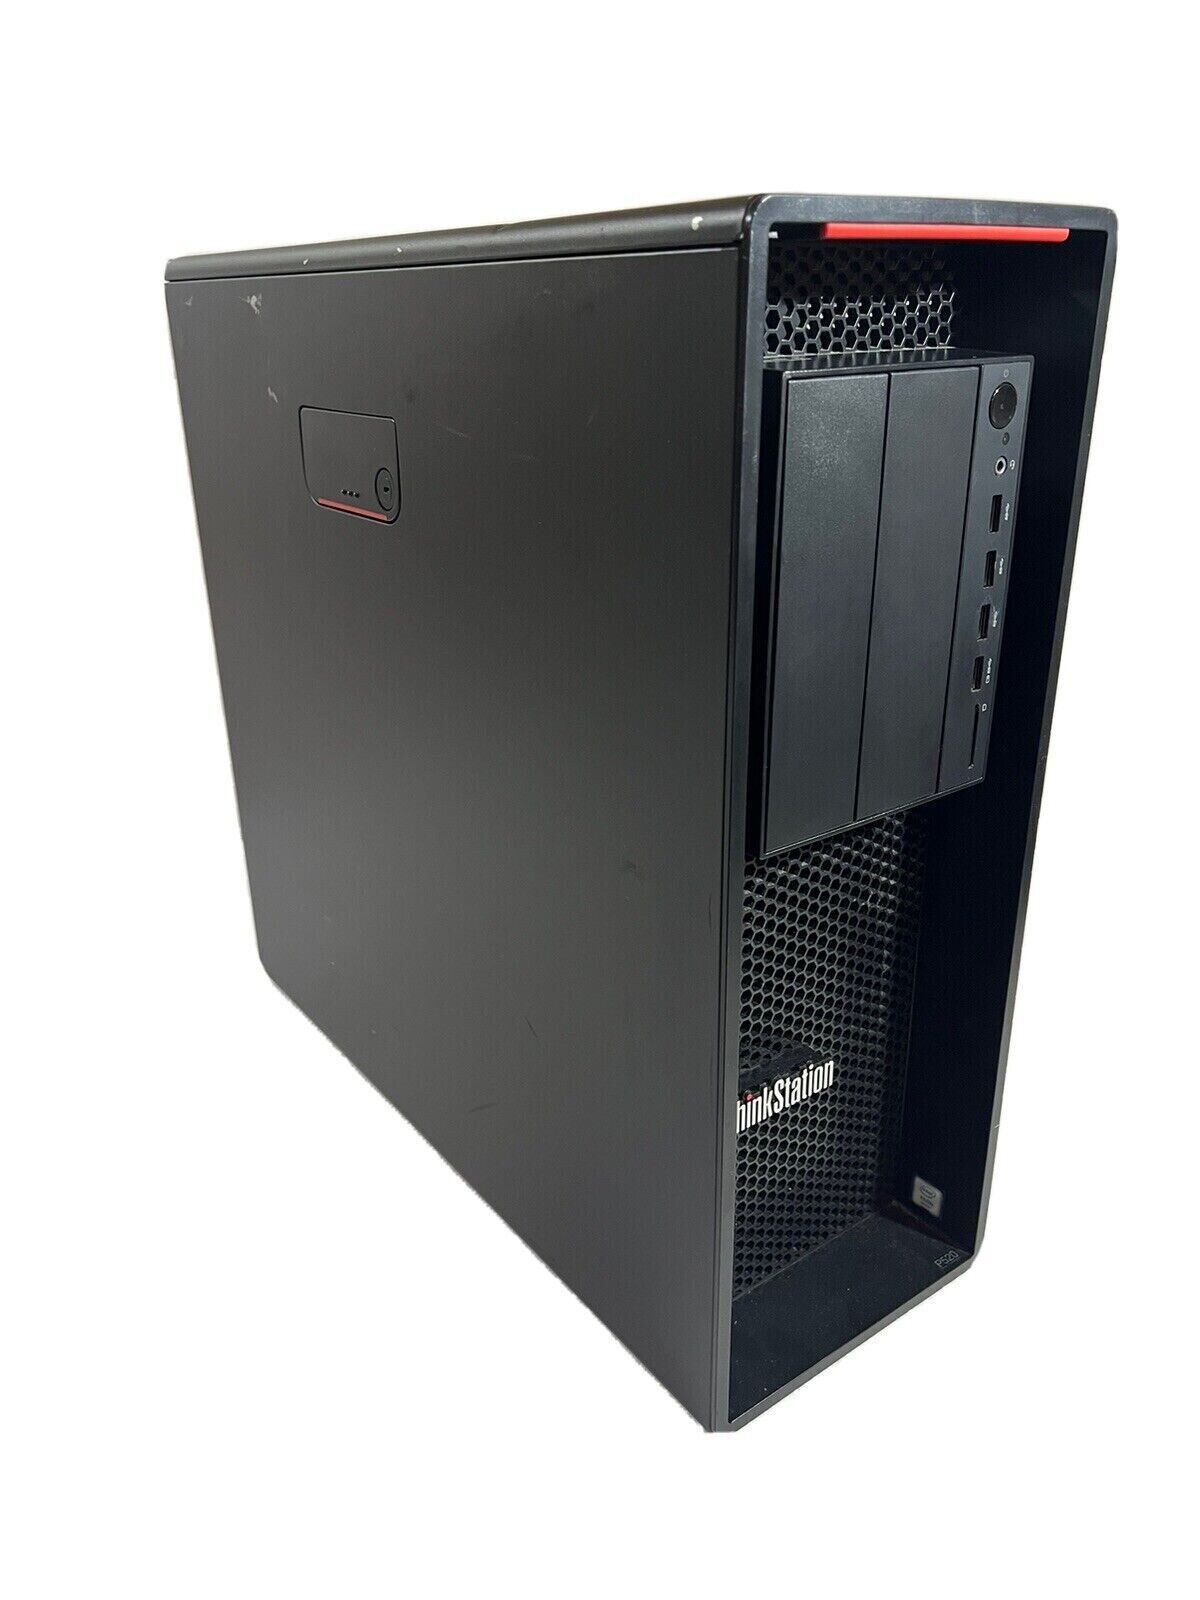 Lenovo ThinkStation P520 Workstation W-2135  | 32GB RAM No GPU/ HDD  | eBay